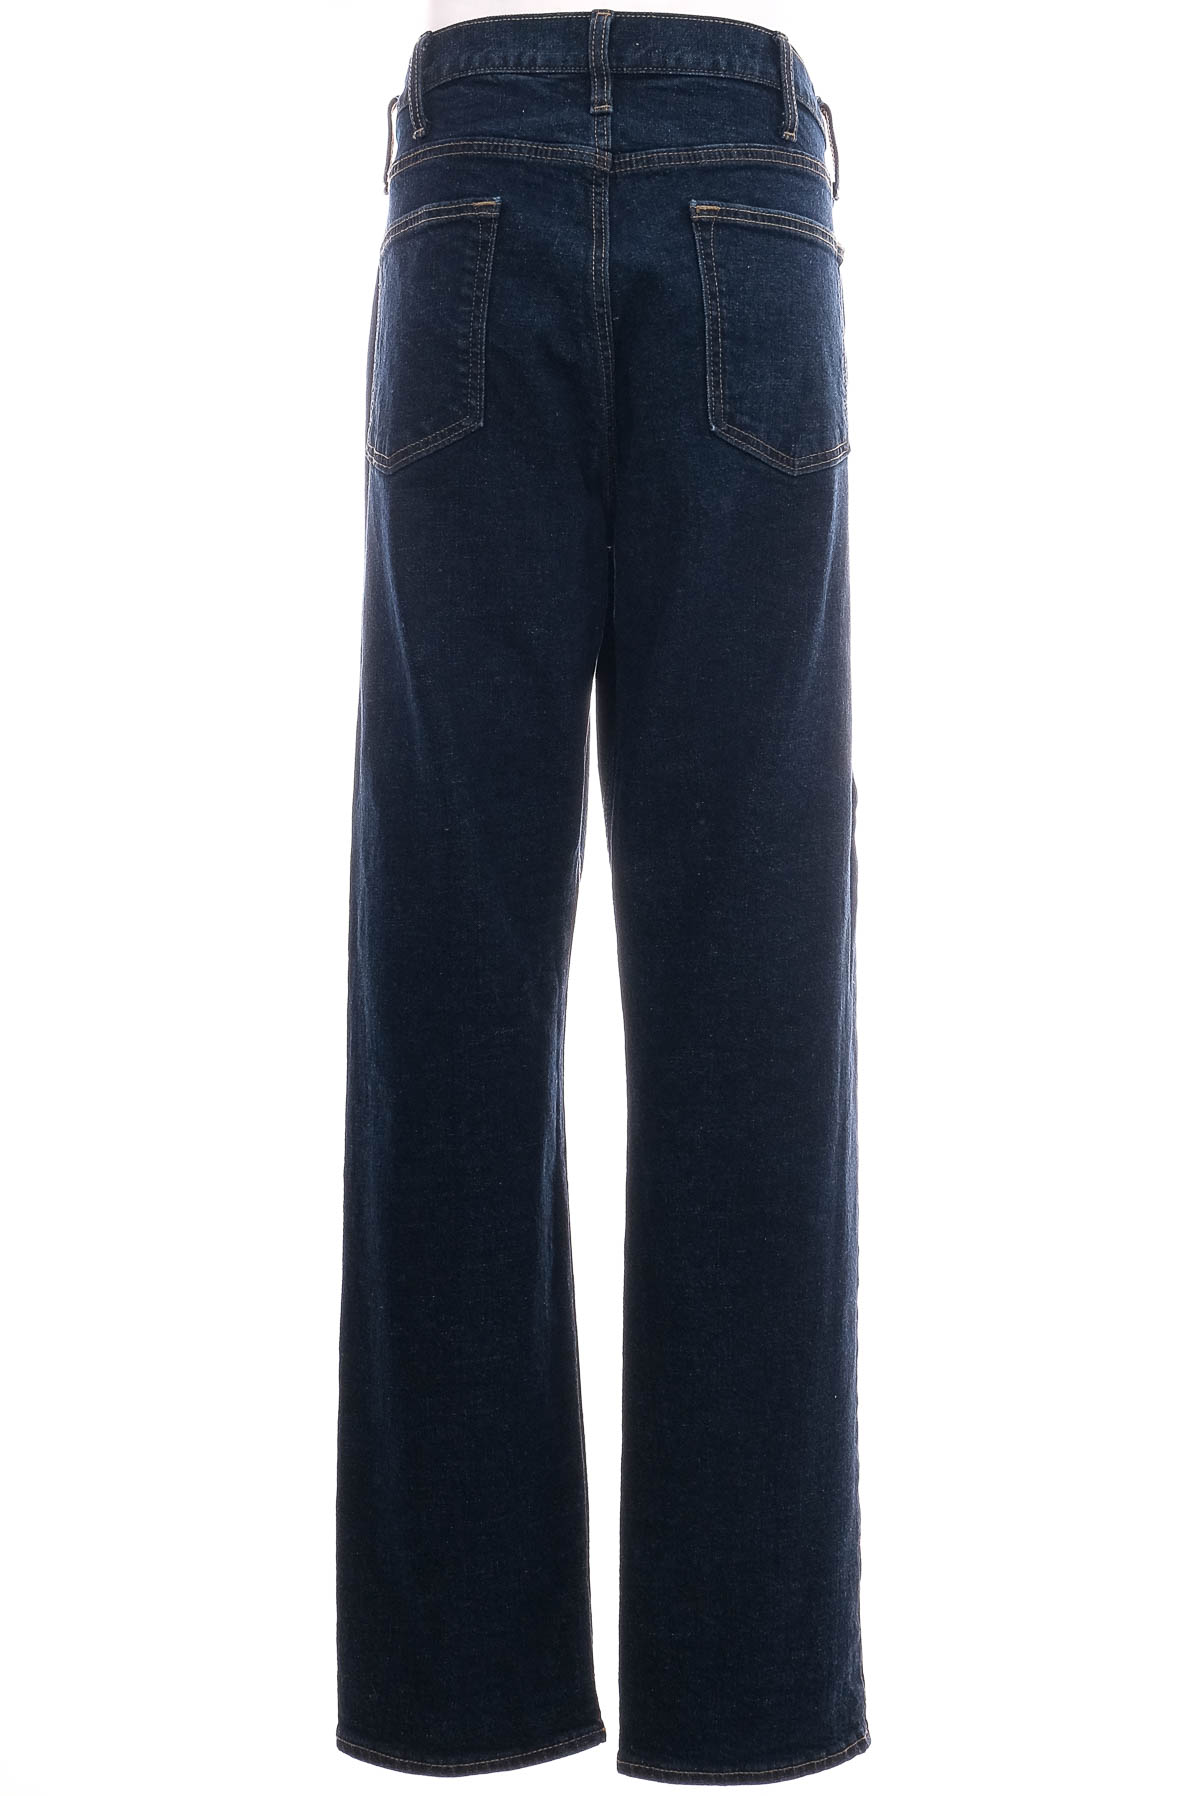 Men's jeans - OLD NAVY - 1